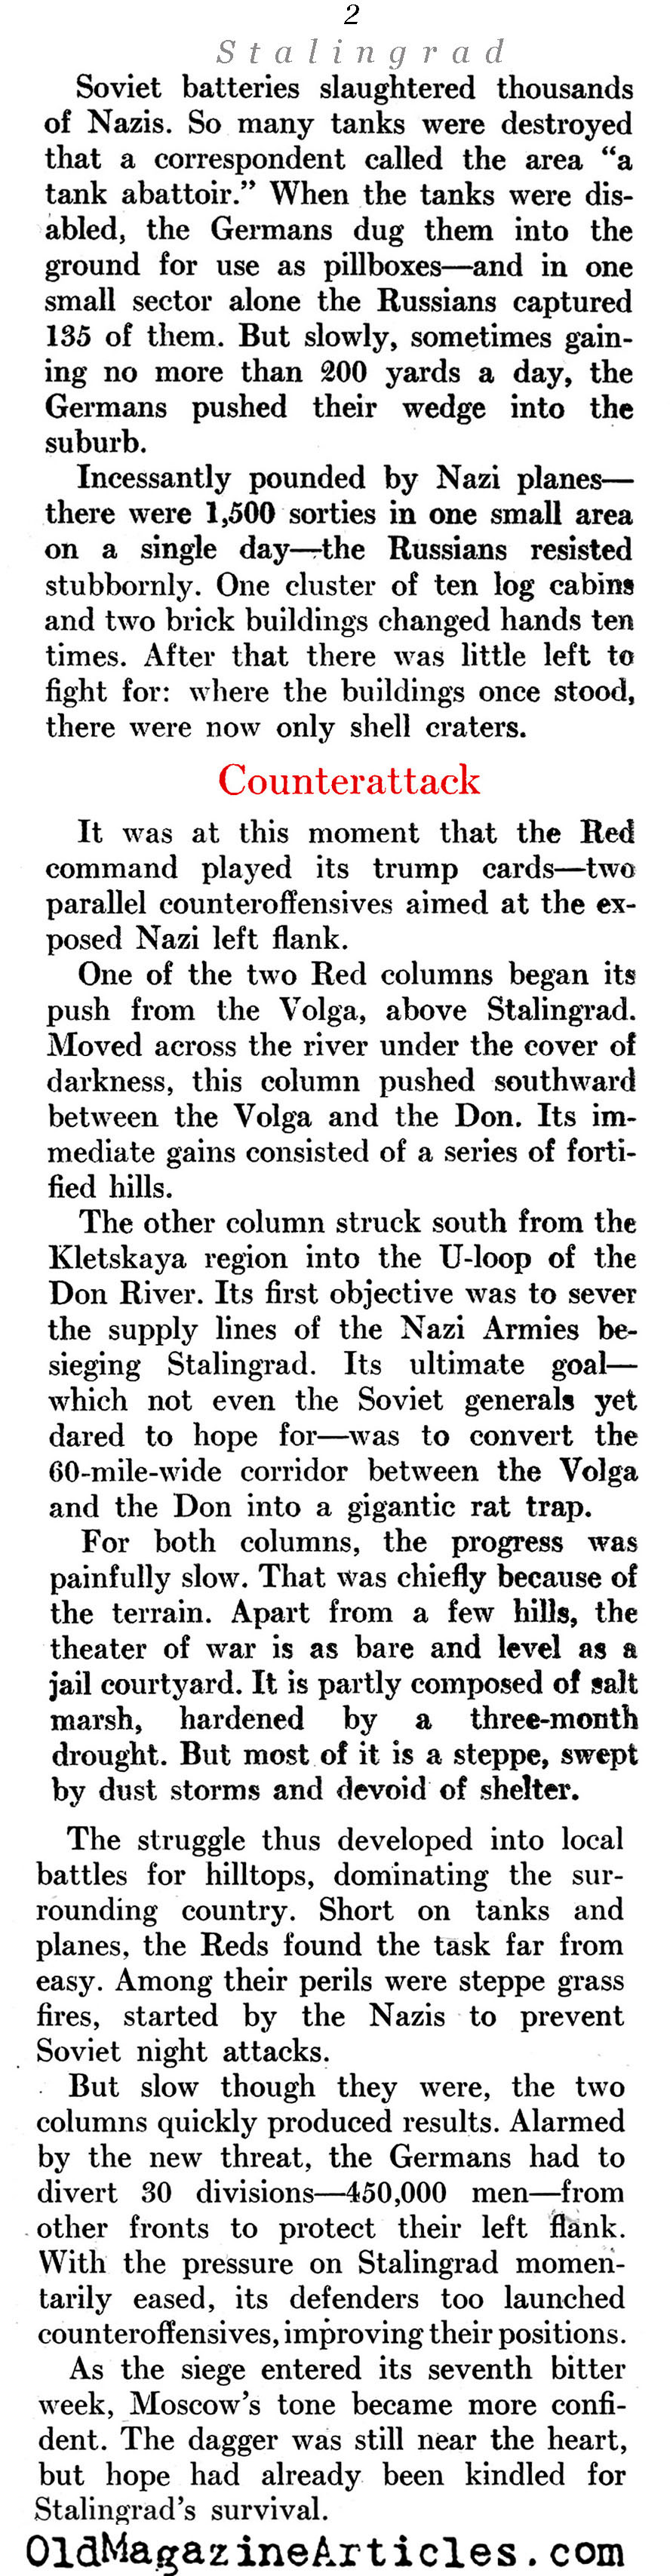 The Battle of Stalingrad (Newsweek Magazine, 1942)